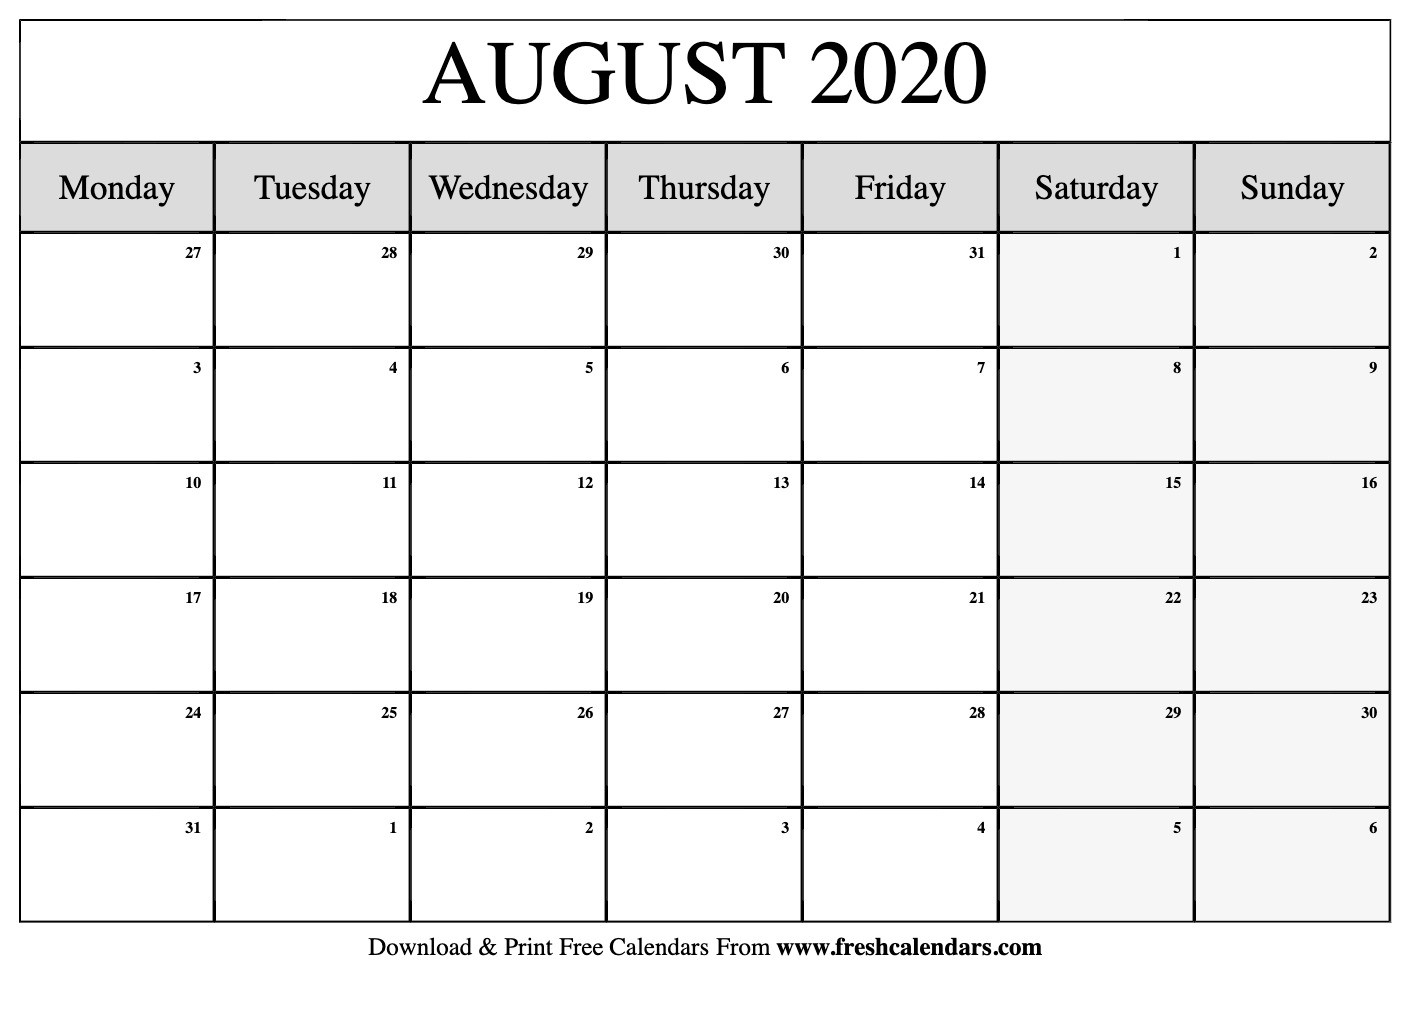 August 2020 Calendar Printable - Fresh Calendars-Aug Monthly Calendar 2020